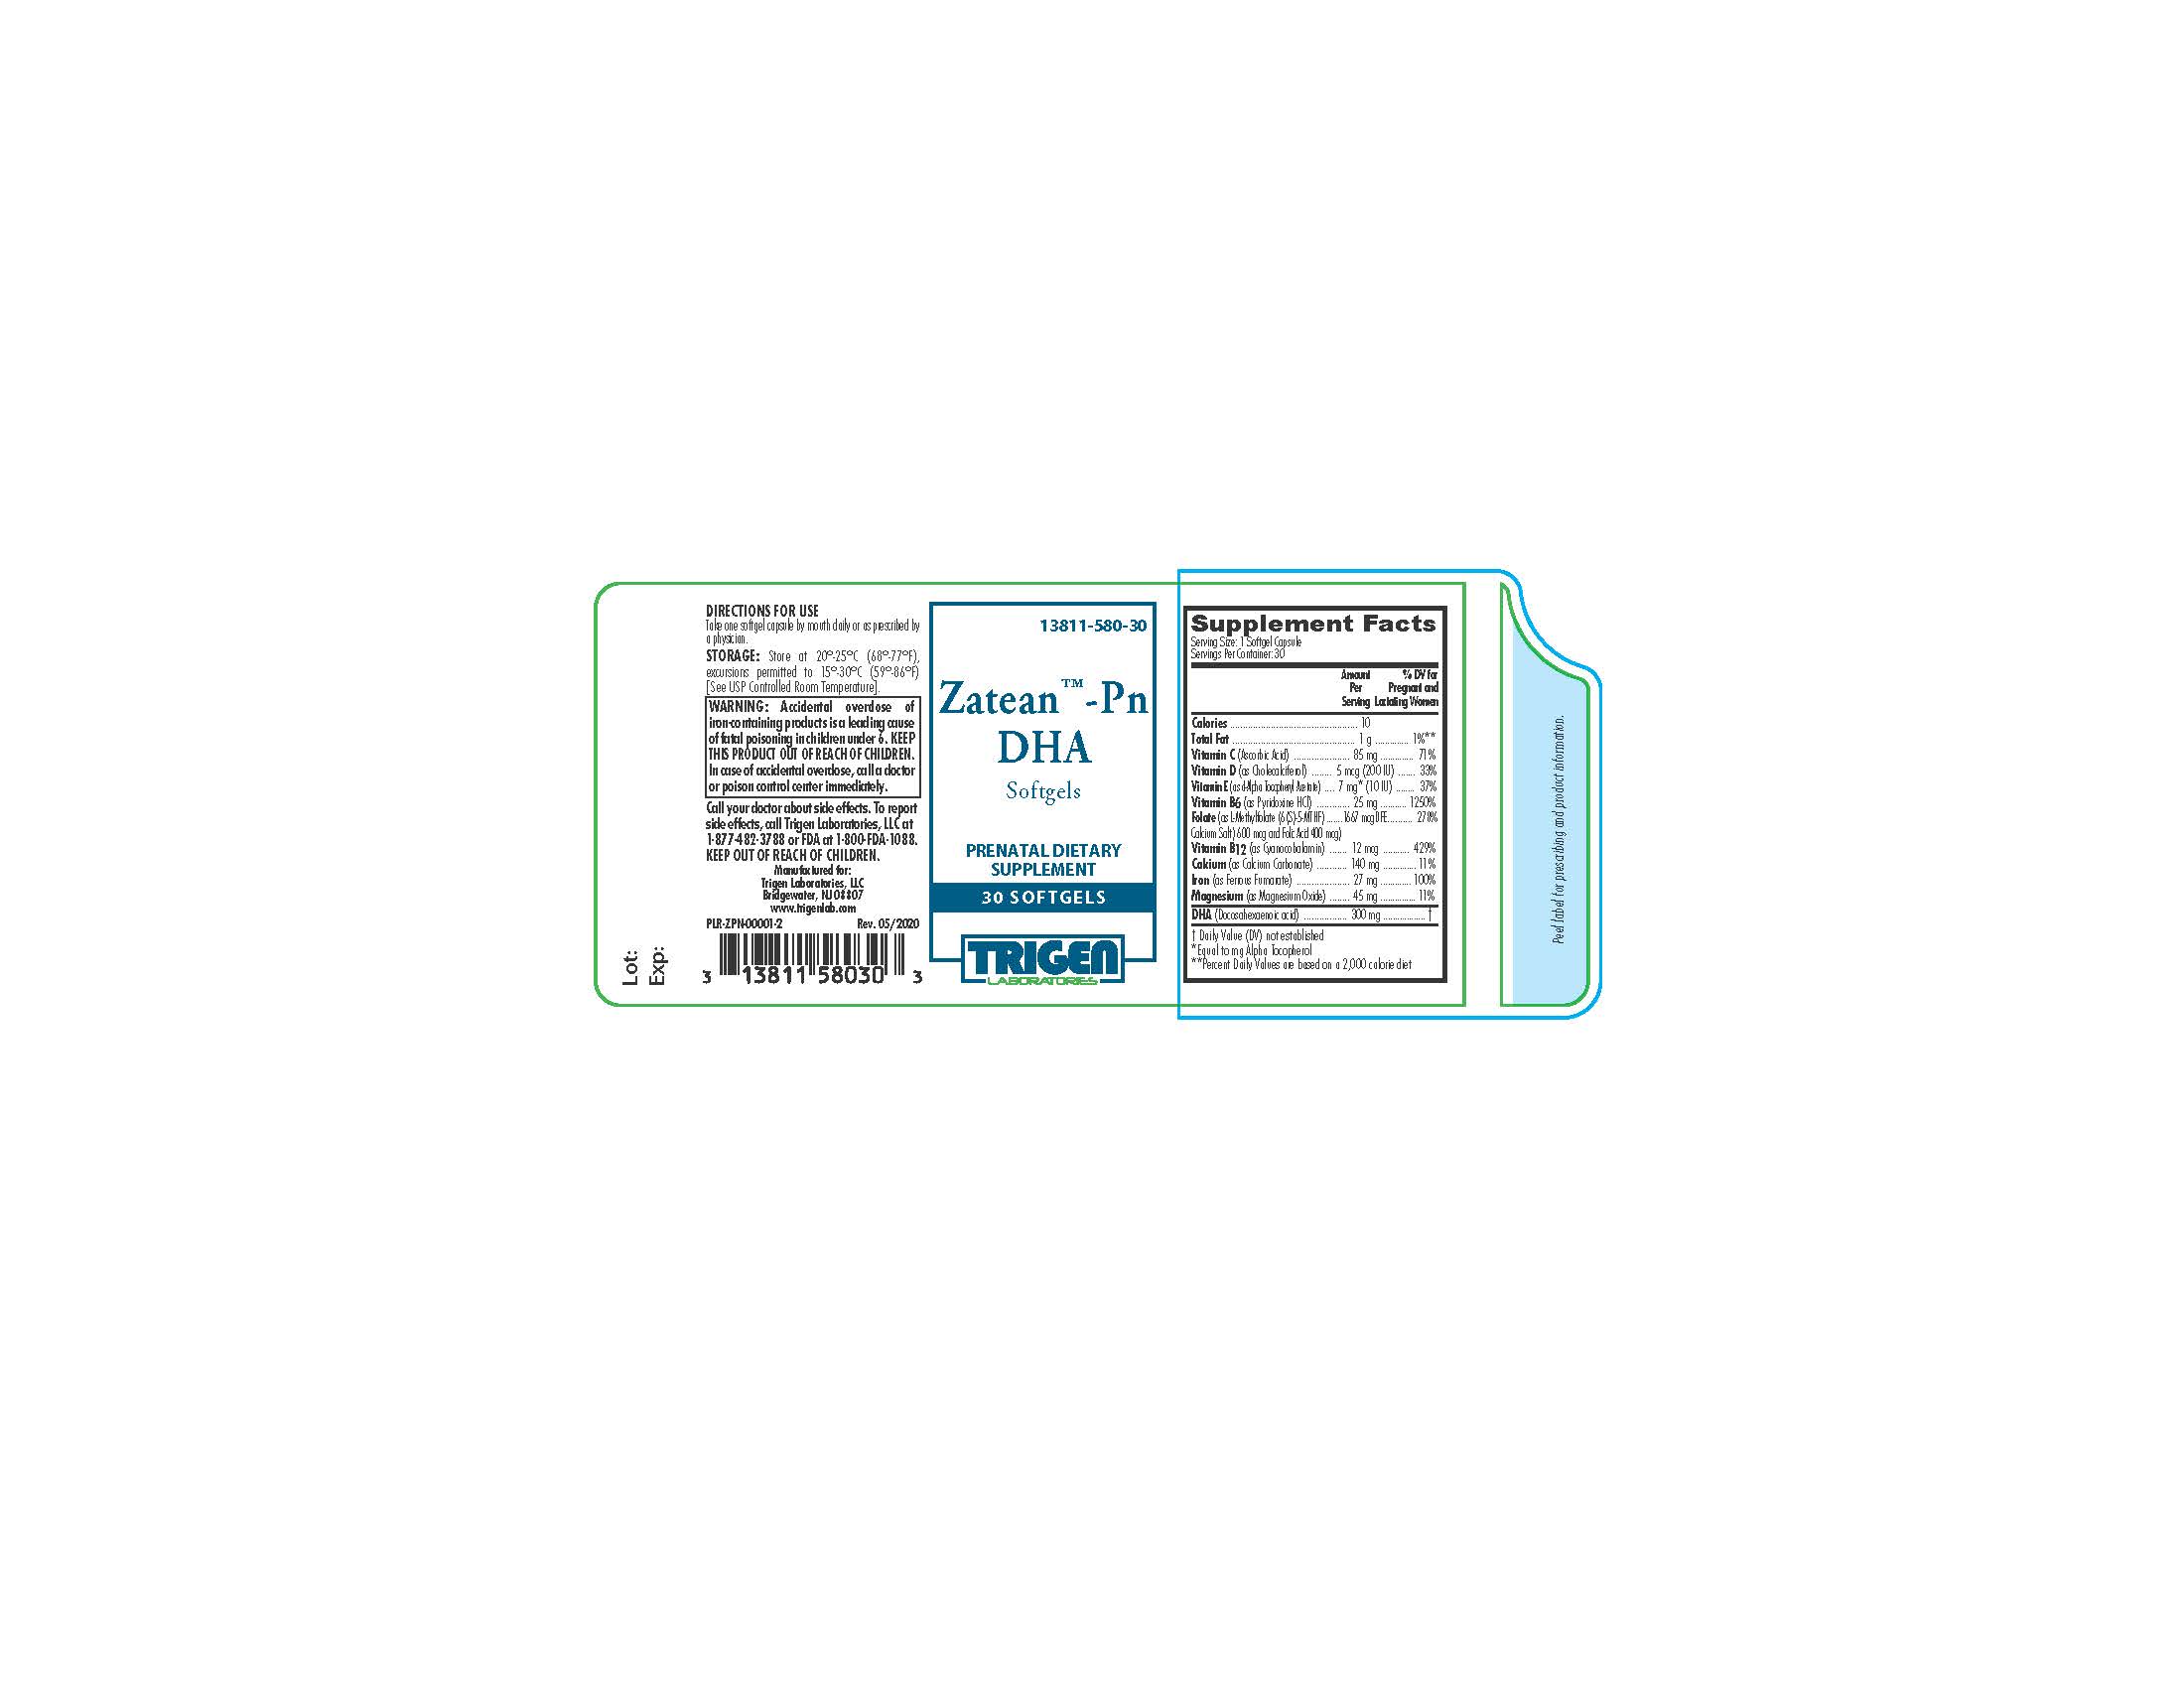 Zatean-Pn DHA Bottle Label